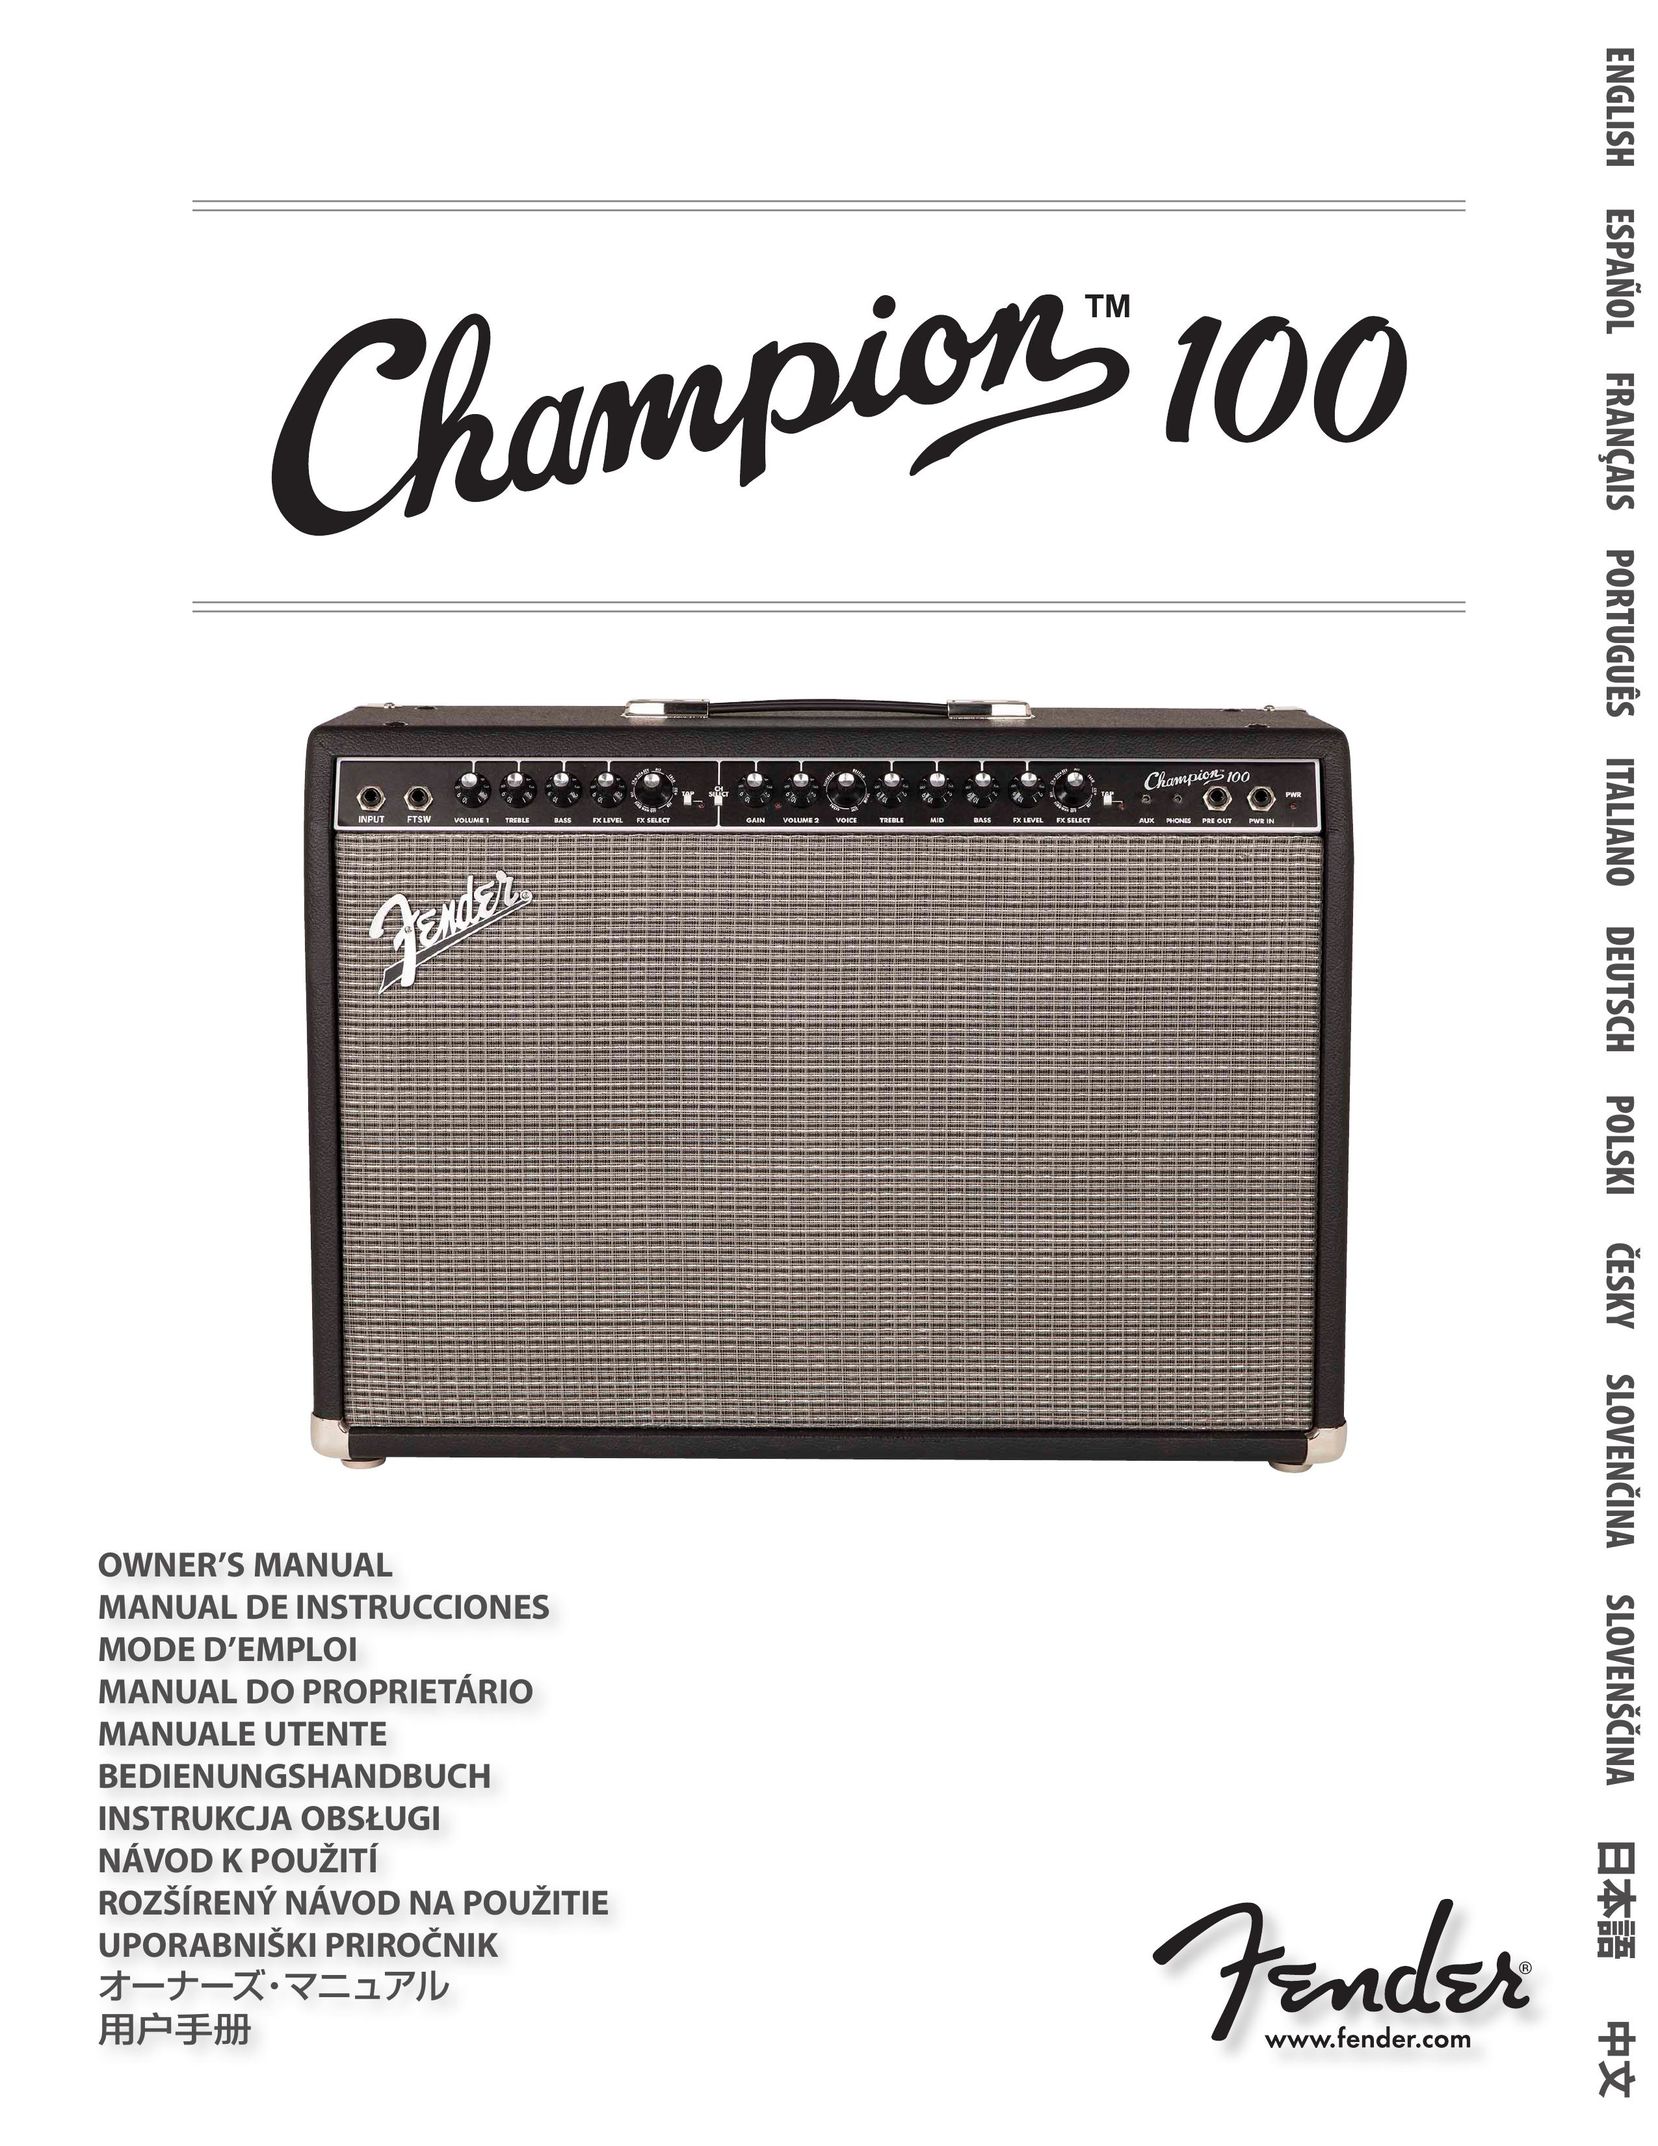 Fender Champion 100 Stereo Amplifier User Manual